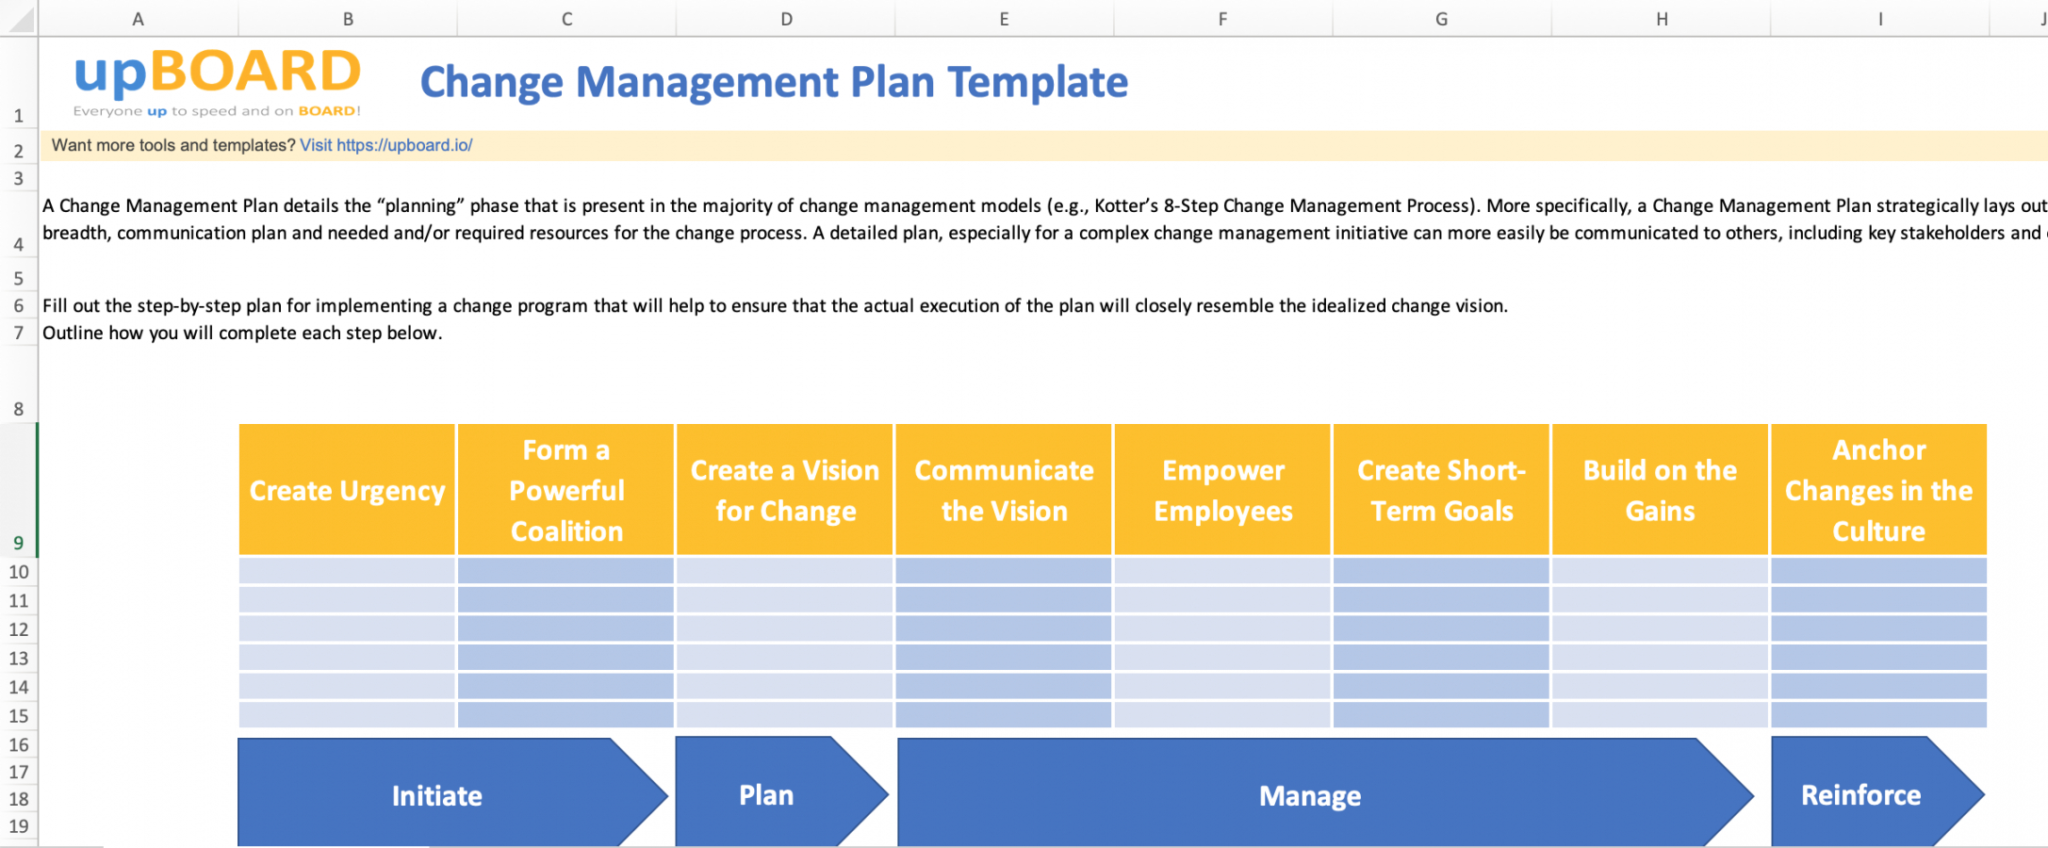 editable-change-management-plan-online-software-tools-templates